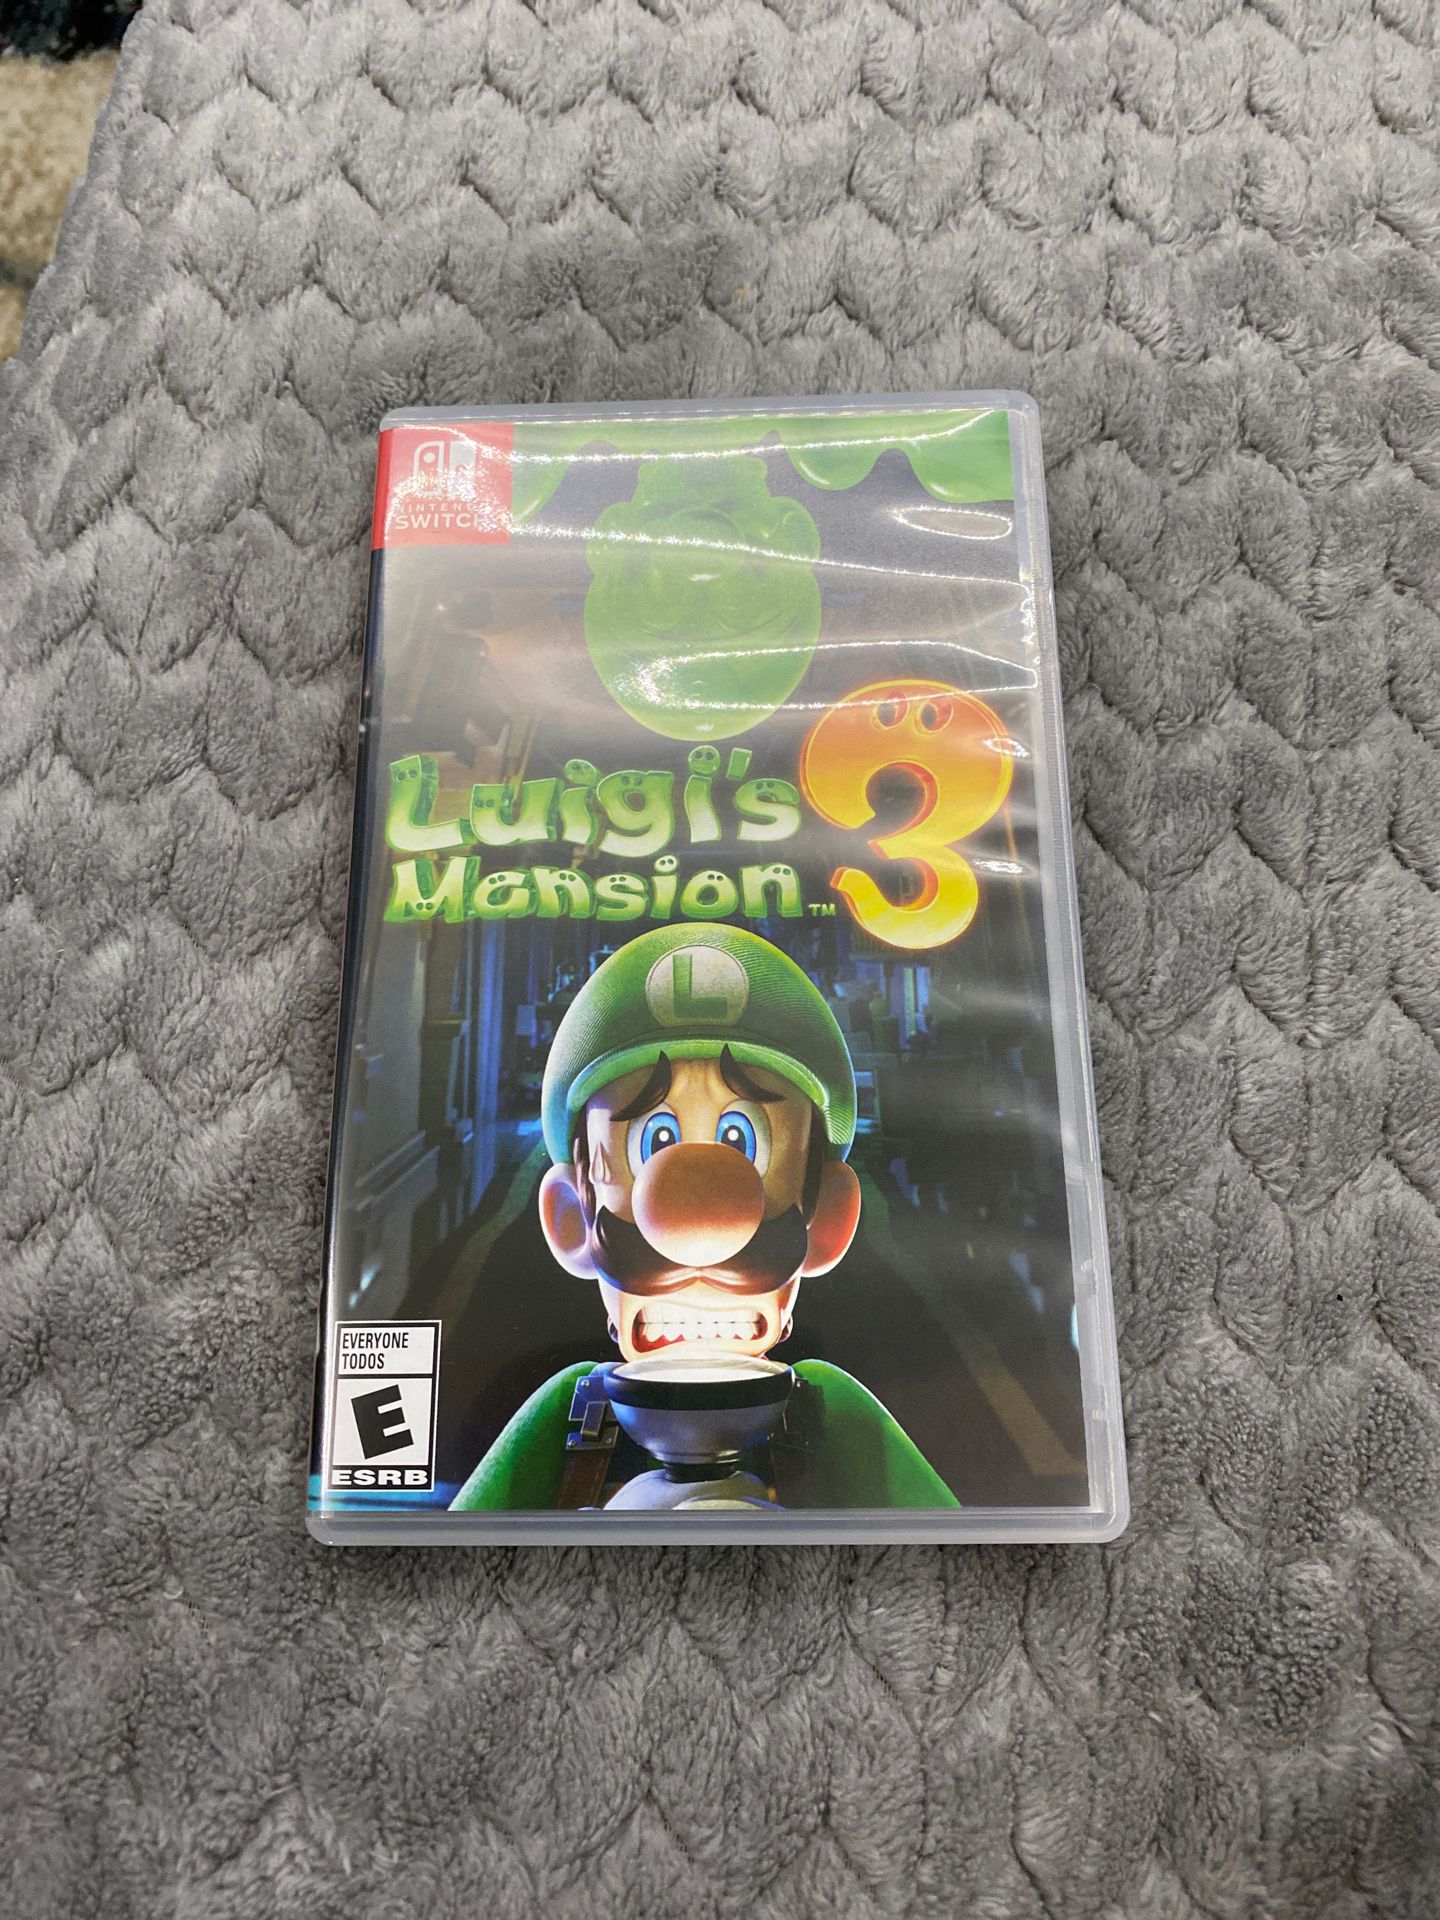 Luigis mansion 3 trade for Zelda botw or Mario odyssey